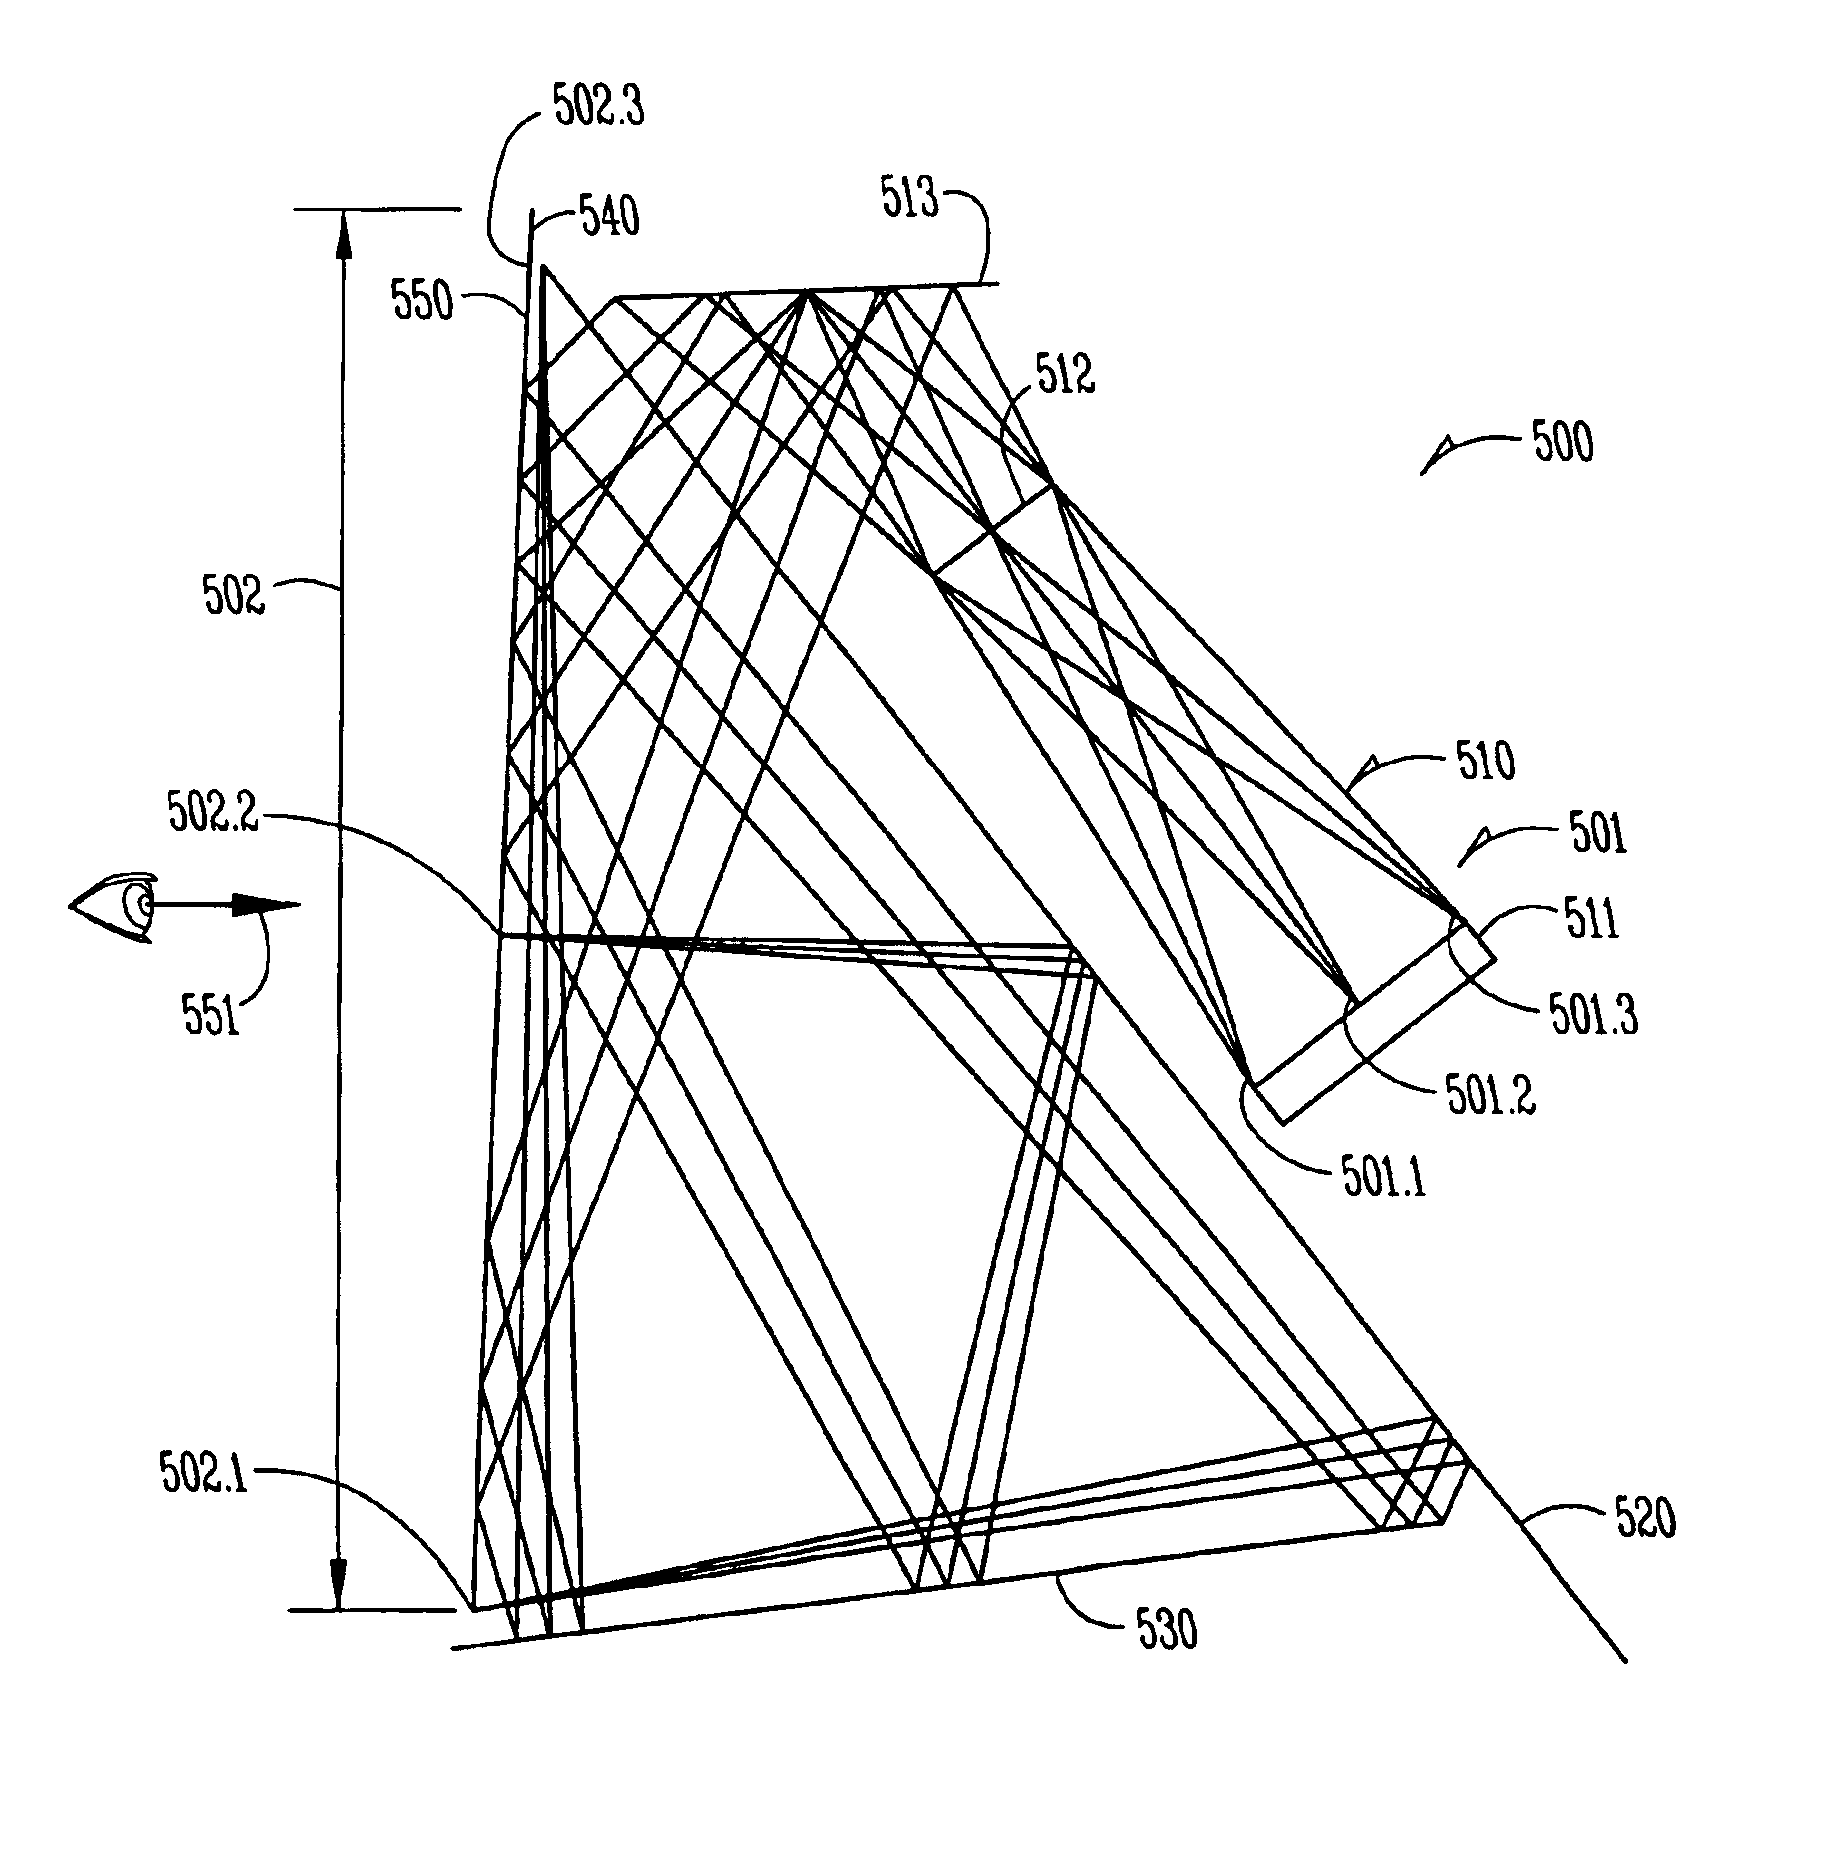 Optical devices employing beam folding with polarizing splitters